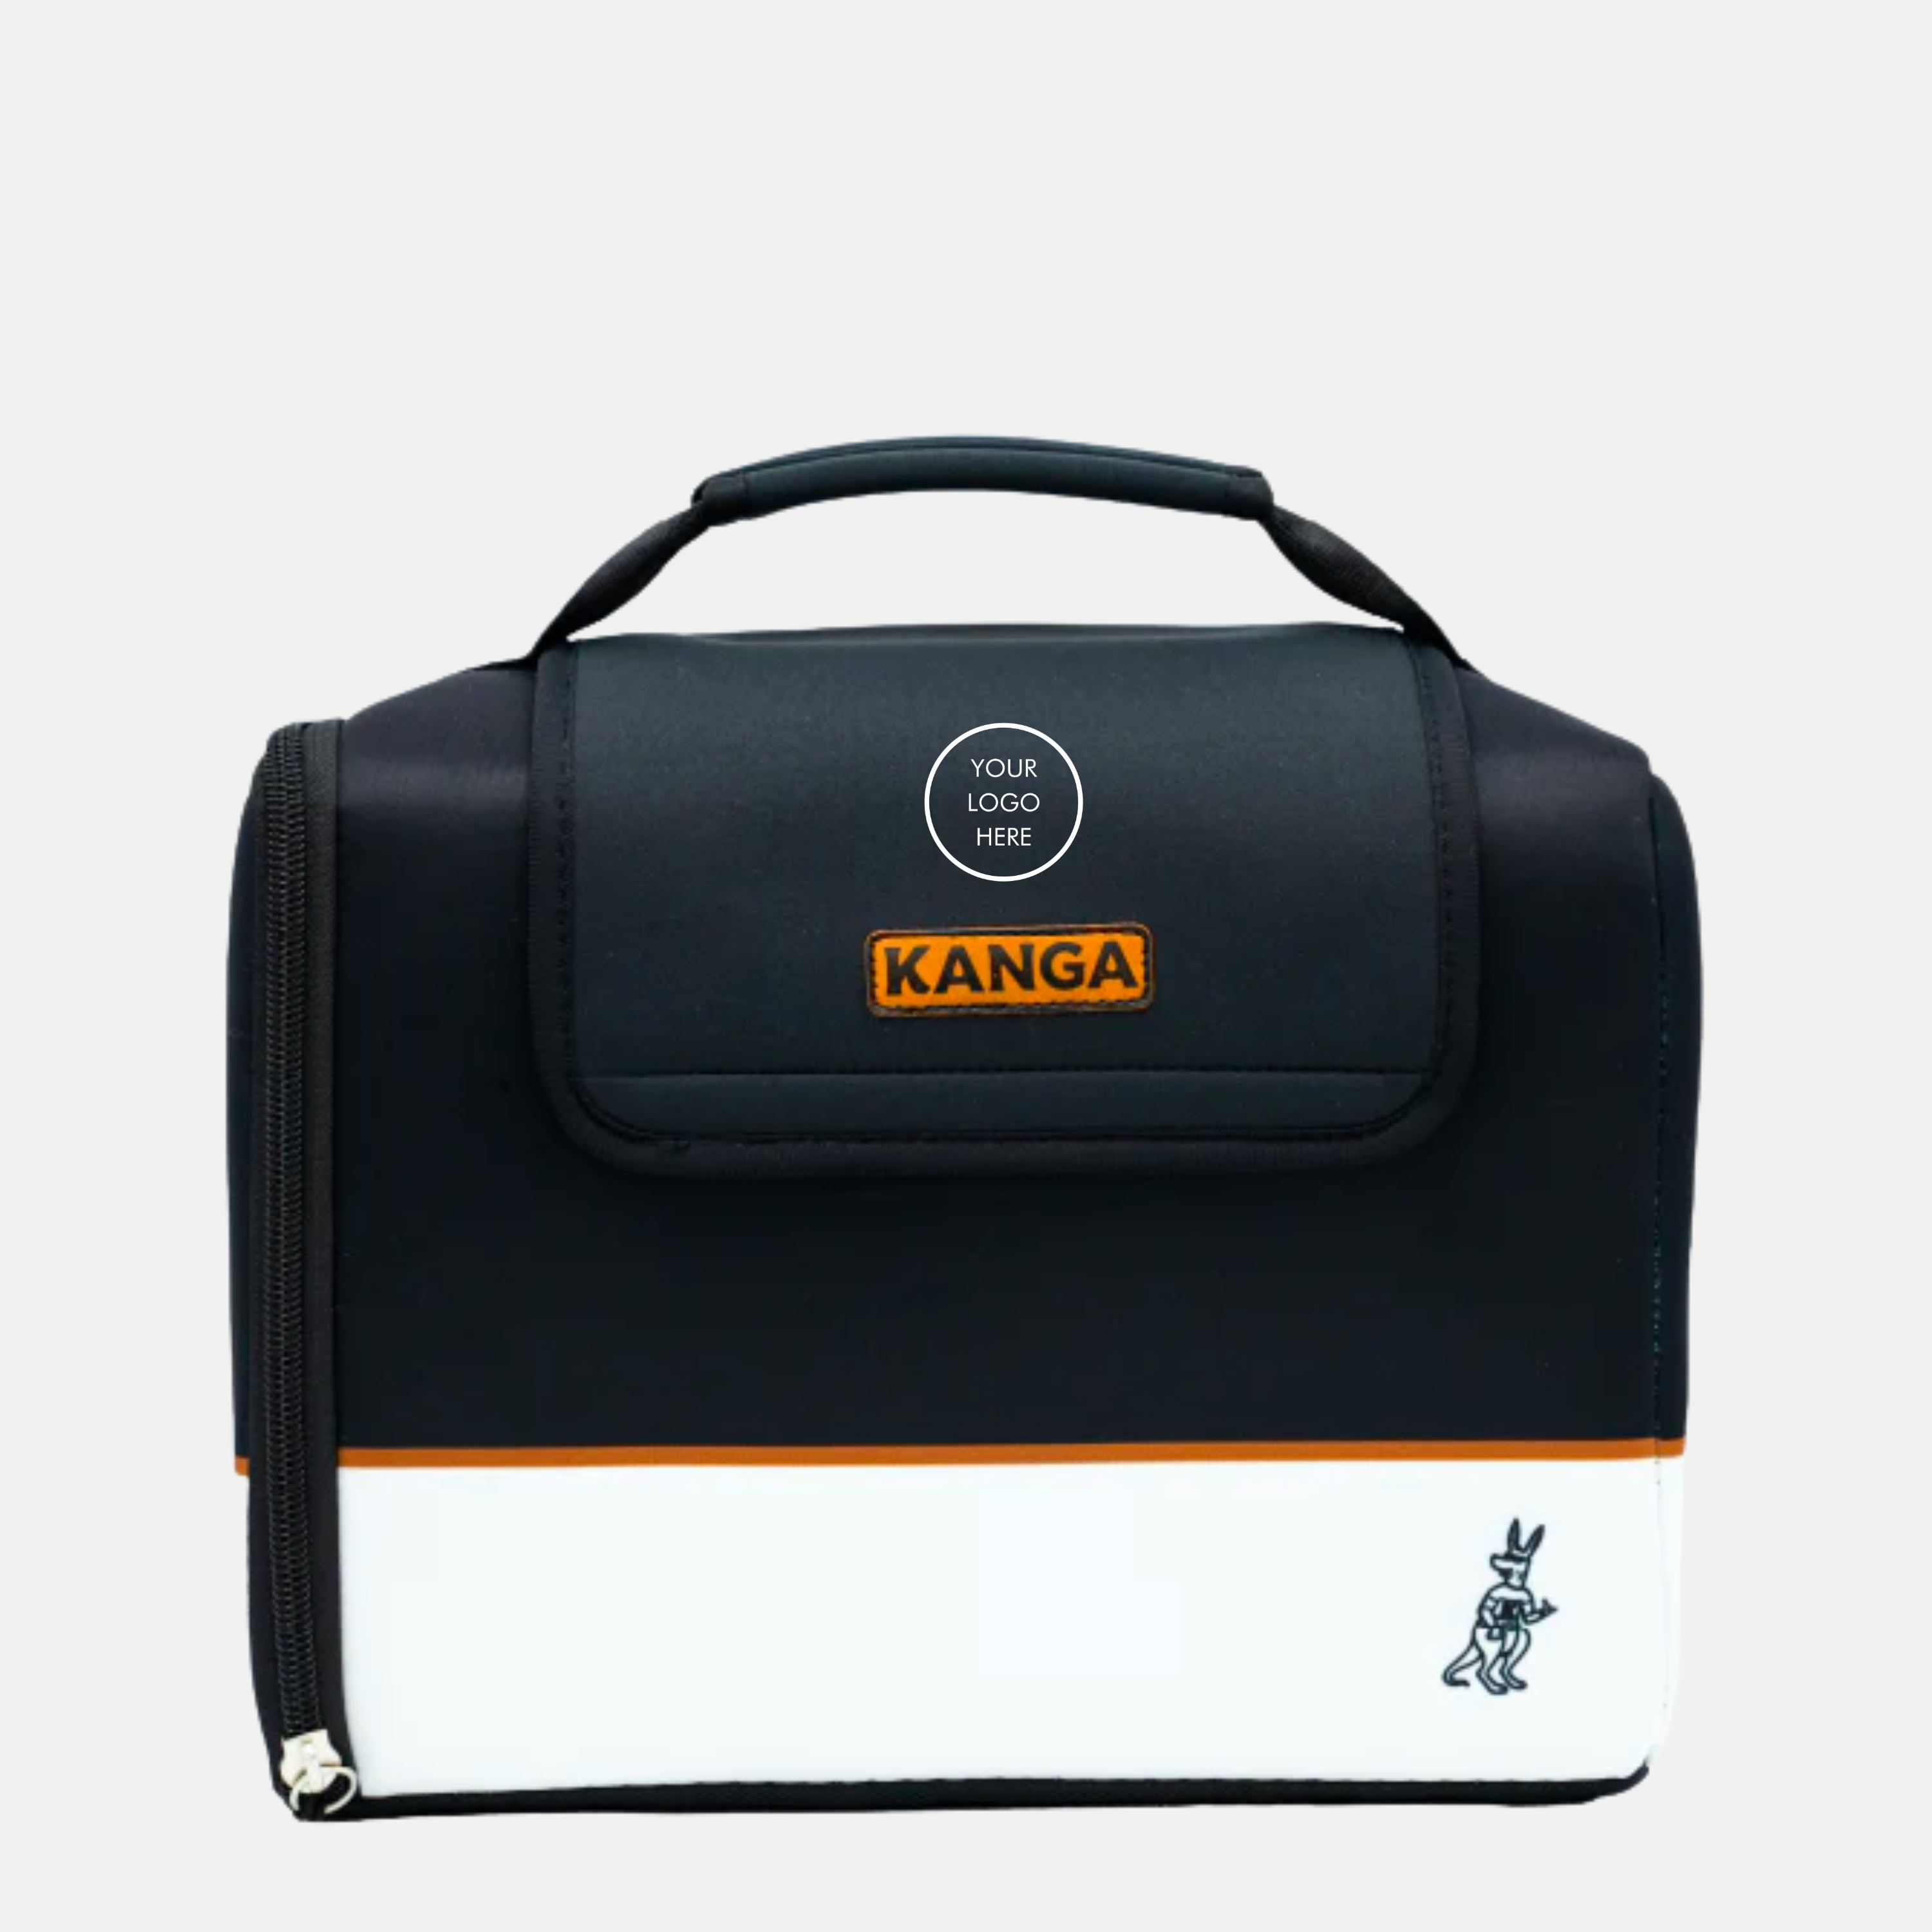 Kanga – Kanga Coolers